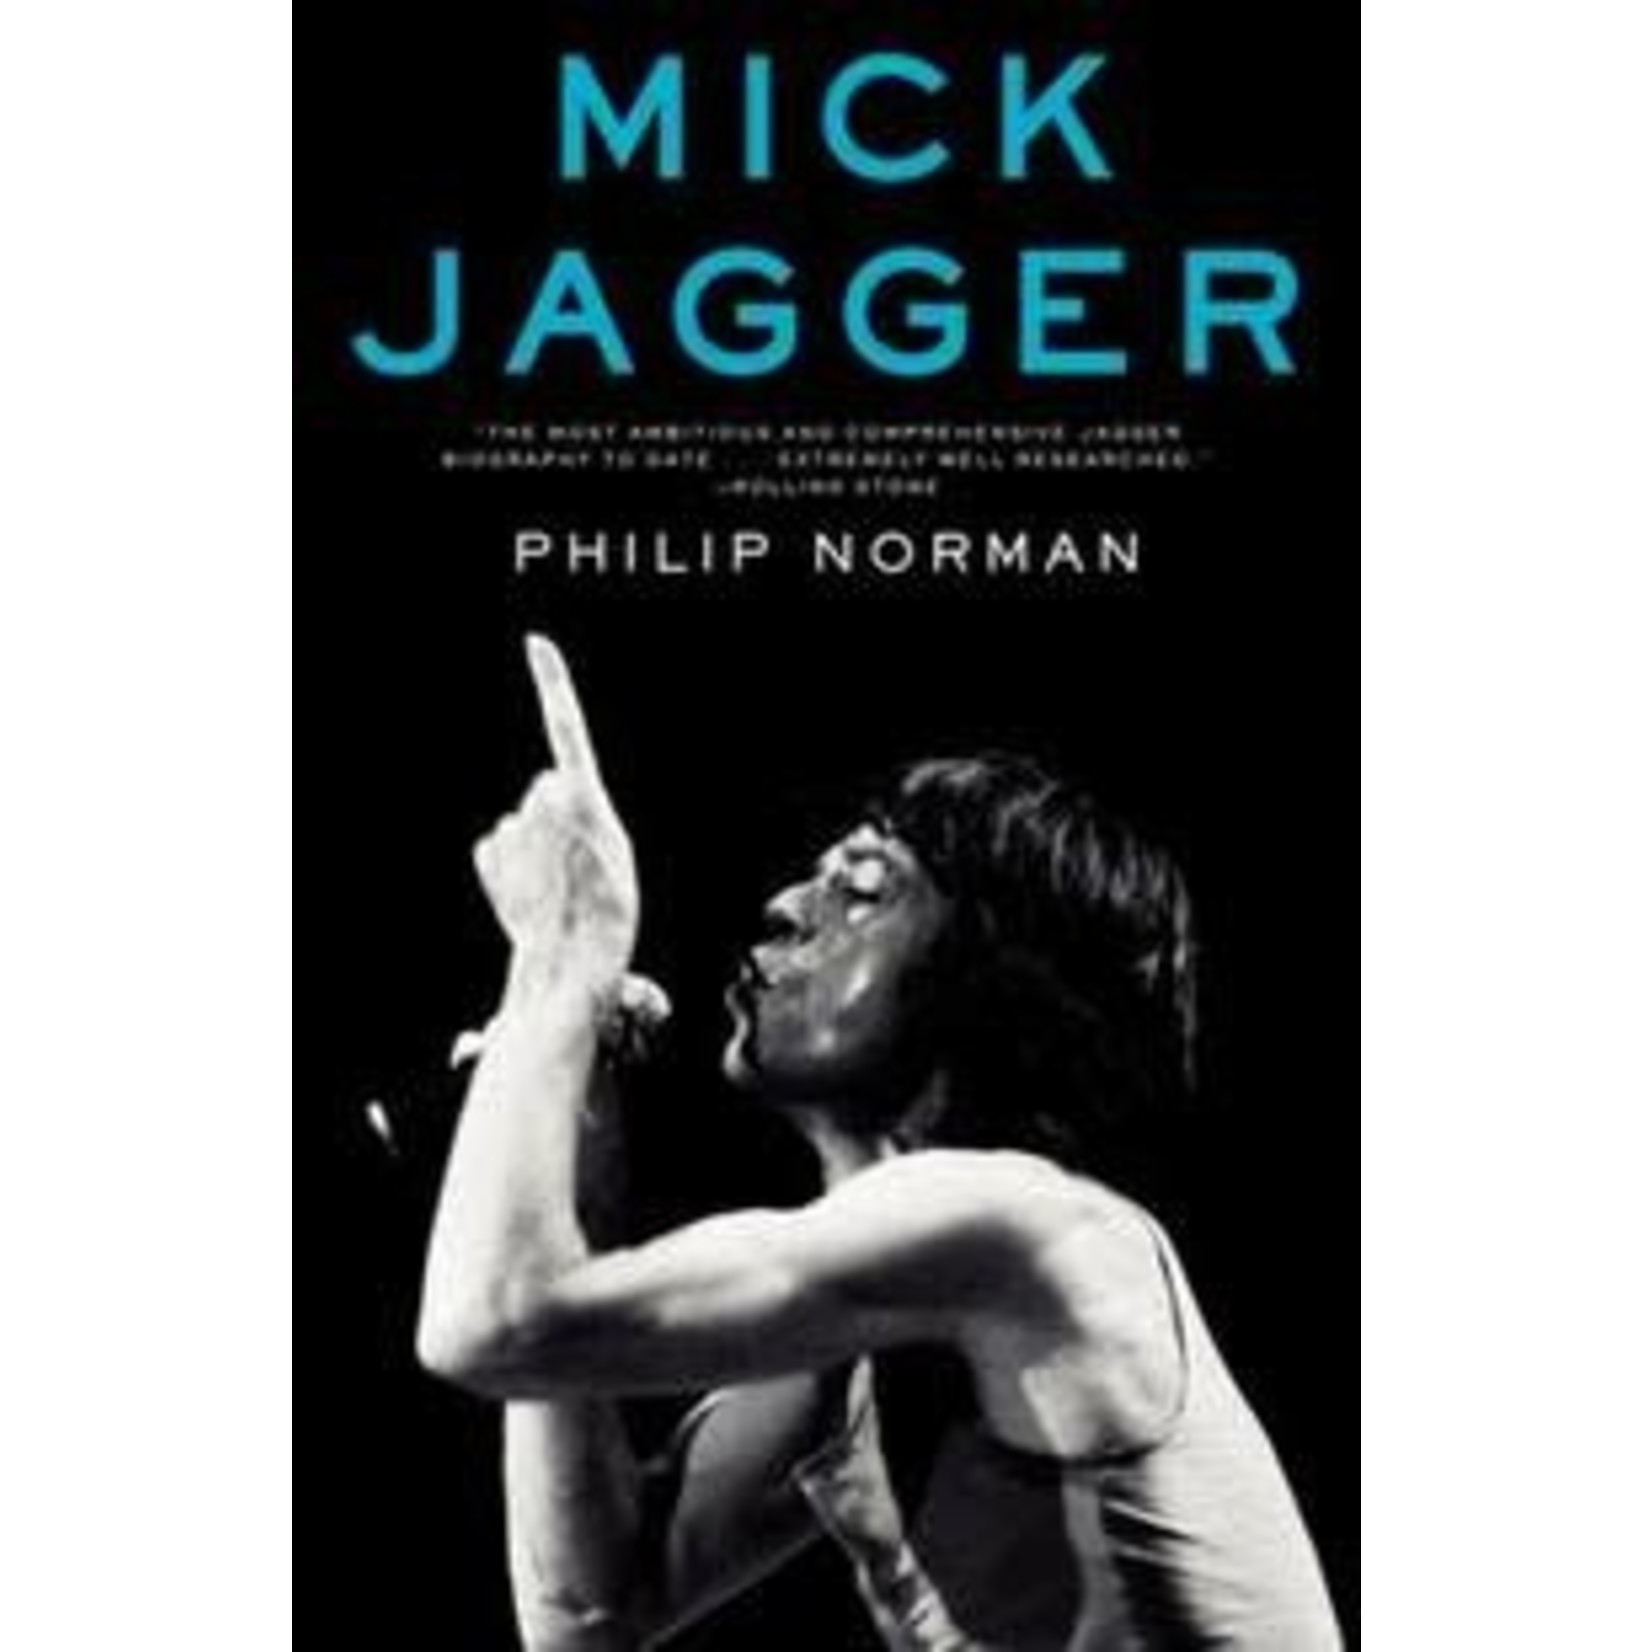 Mick Jagger (Rolling Stones) - Mick Jagger [Book]